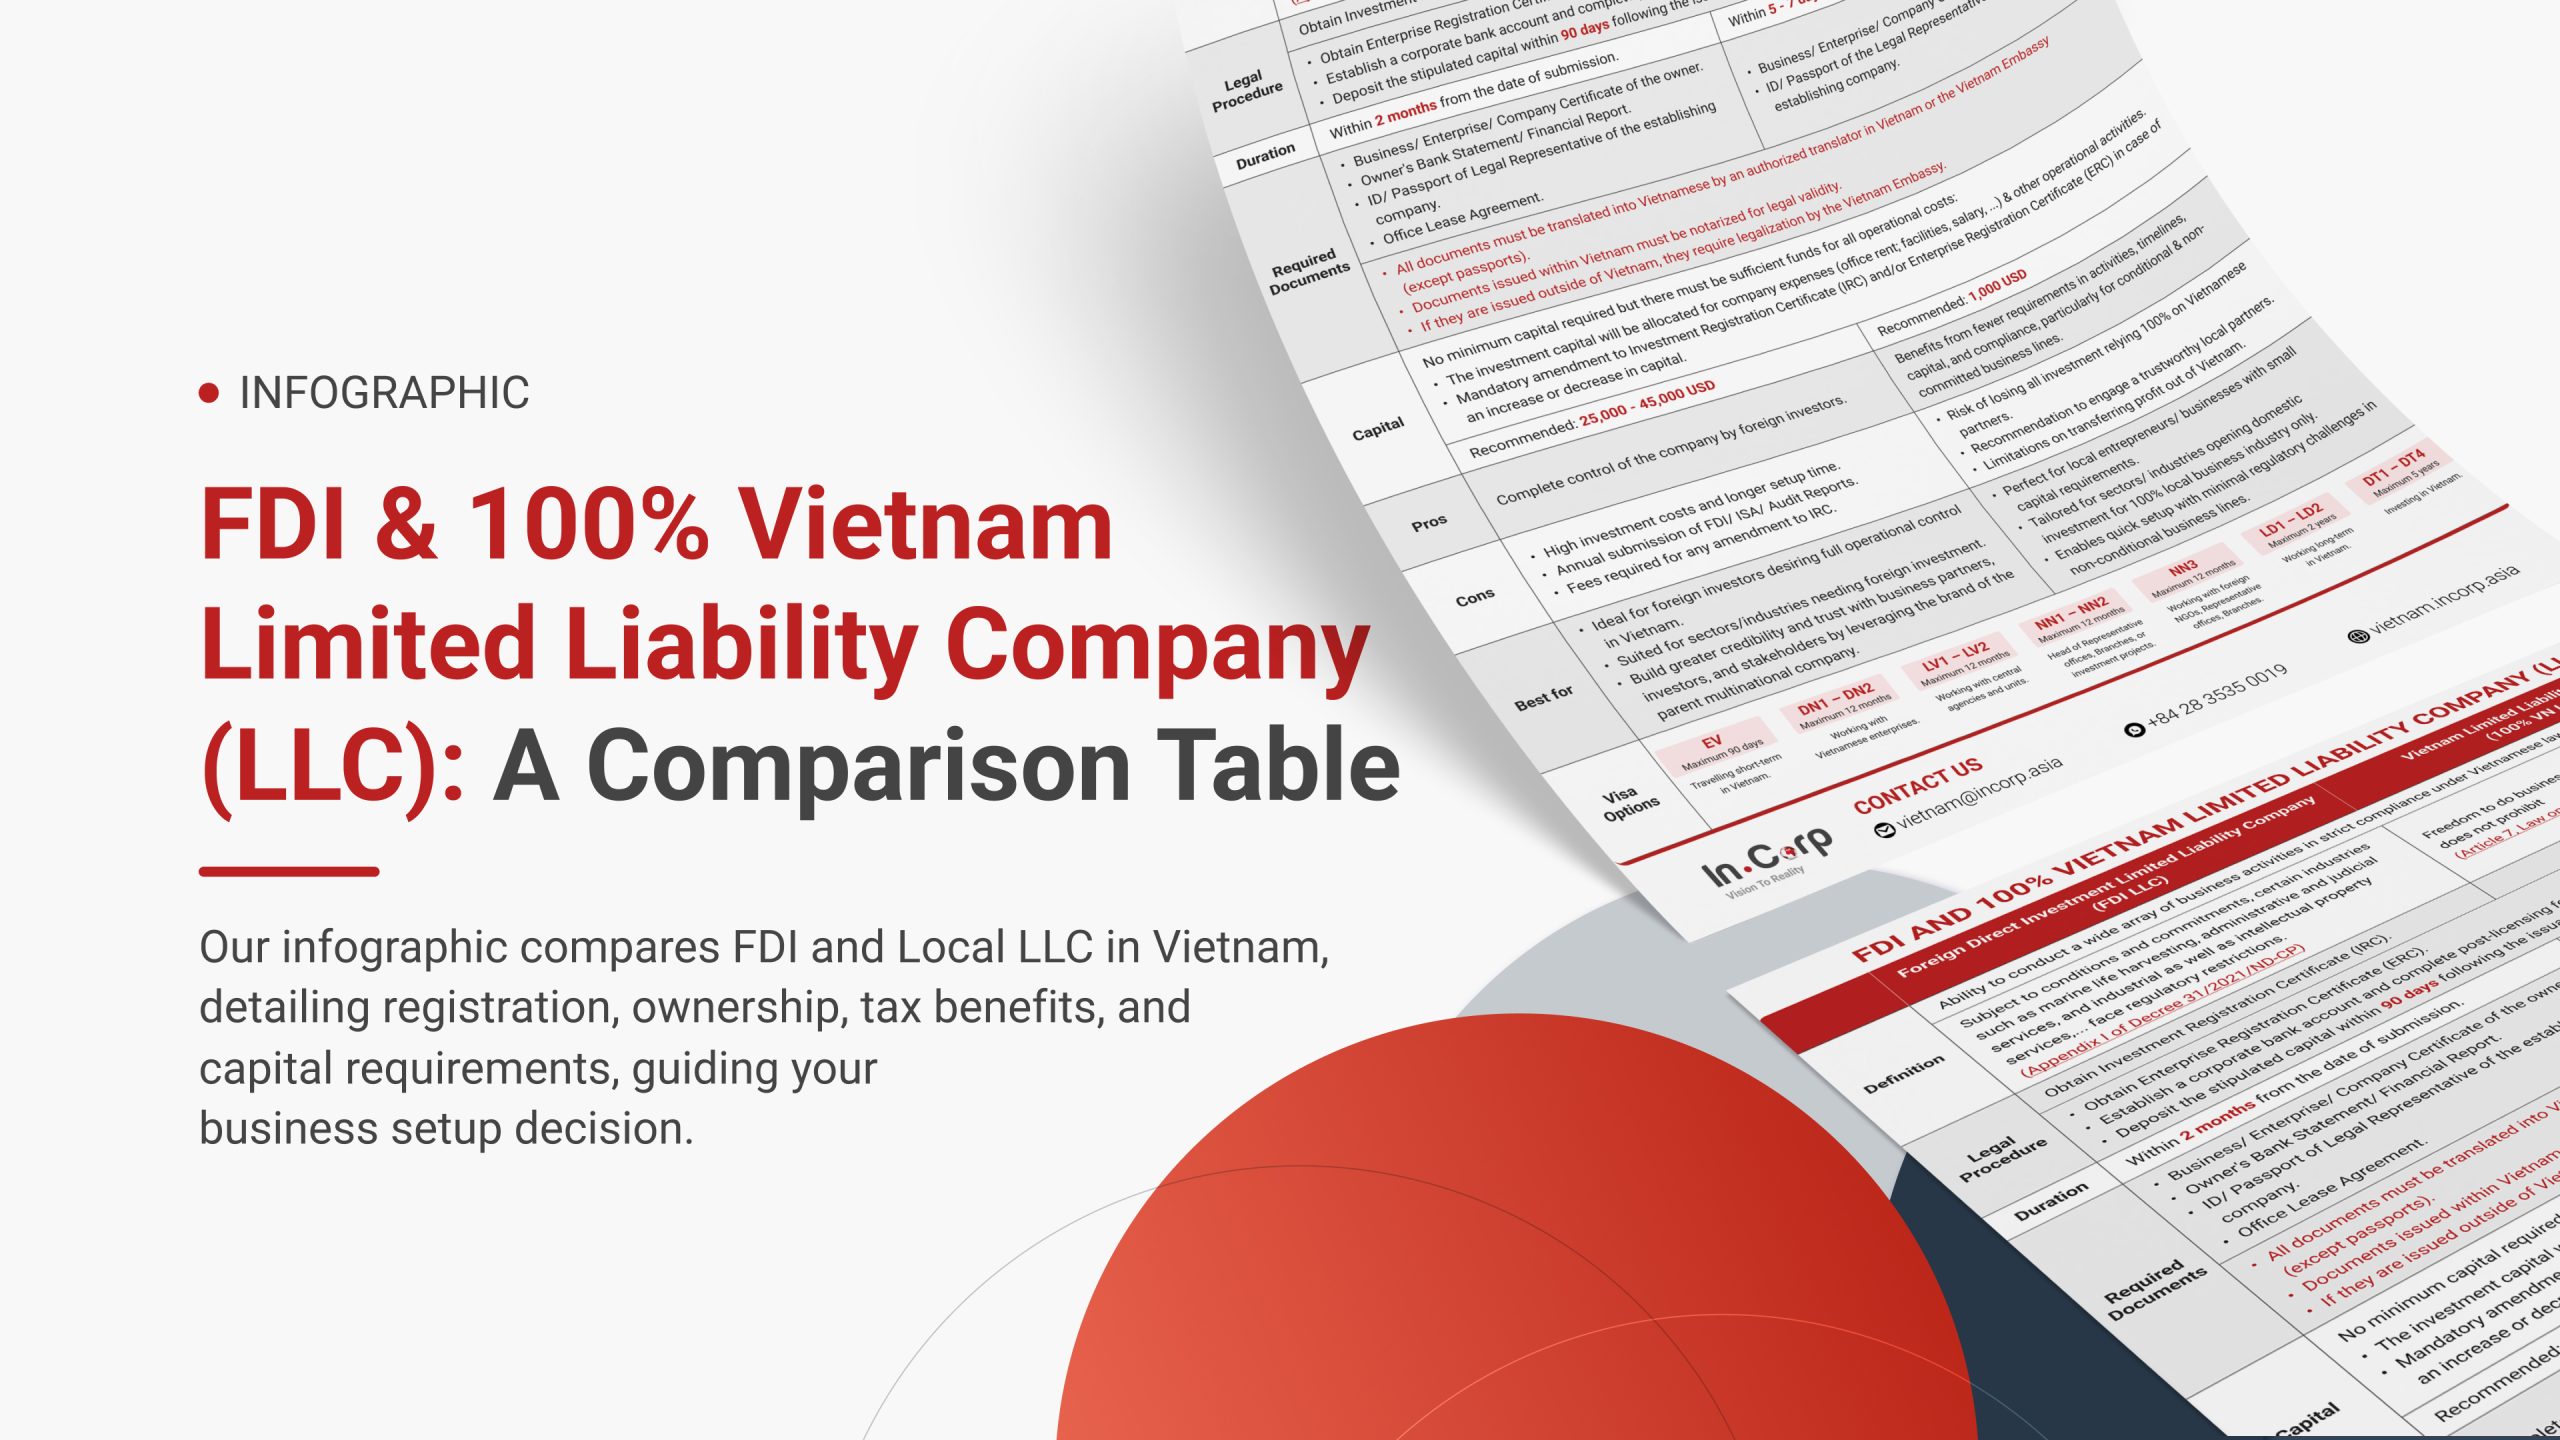 FDI and 100% Vietnam Limited Liability Company (LLC): A Comparison Table